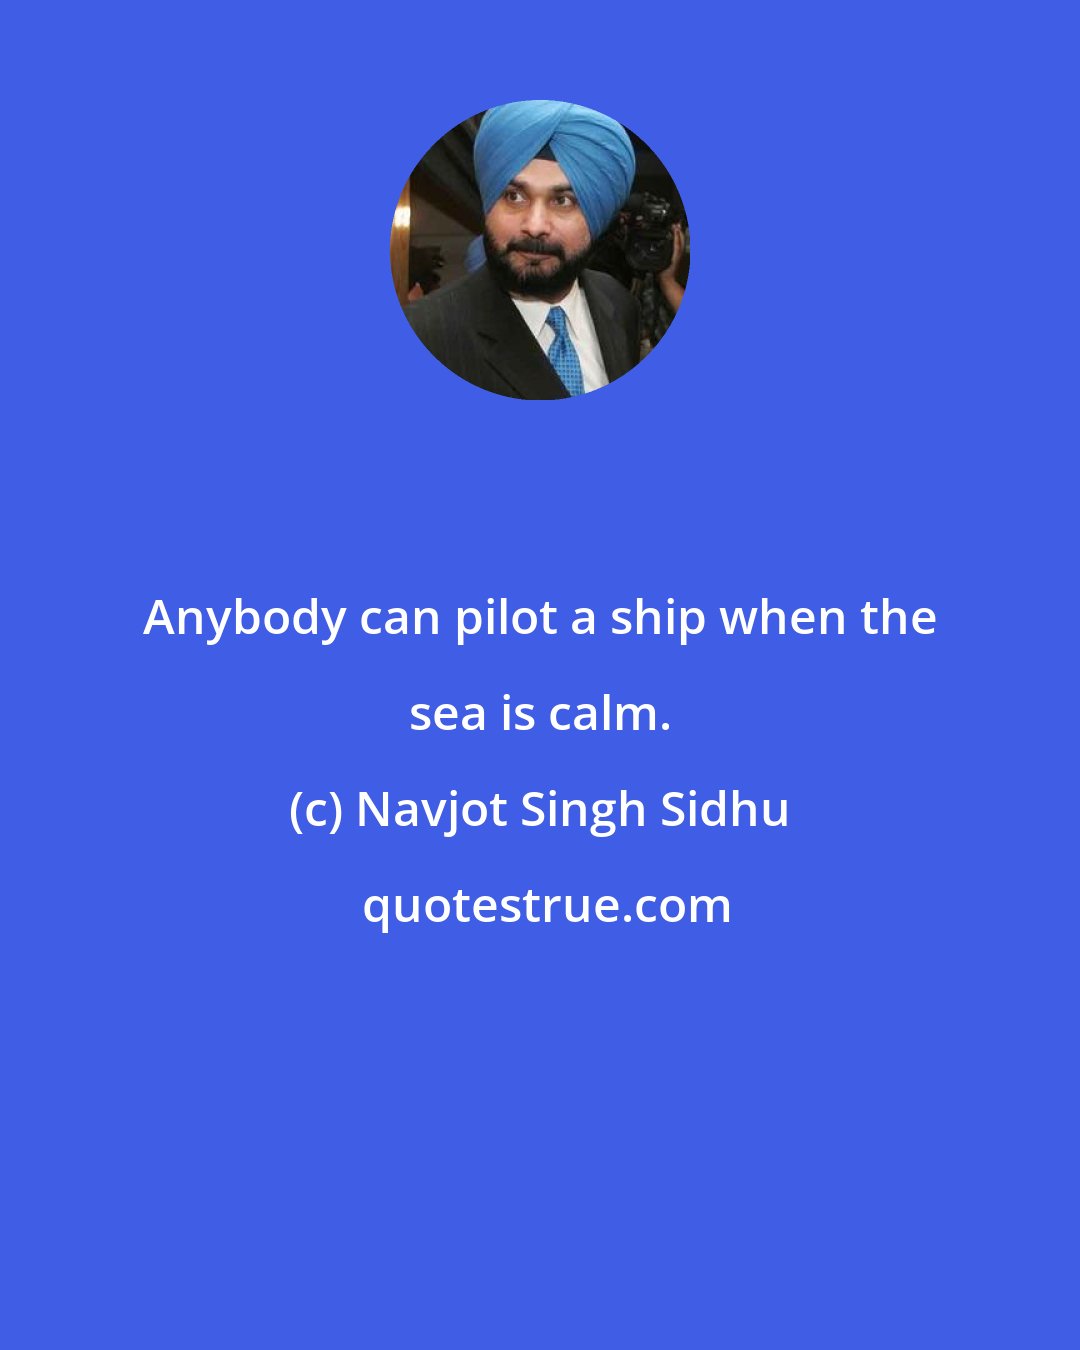 Navjot Singh Sidhu: Anybody can pilot a ship when the sea is calm.